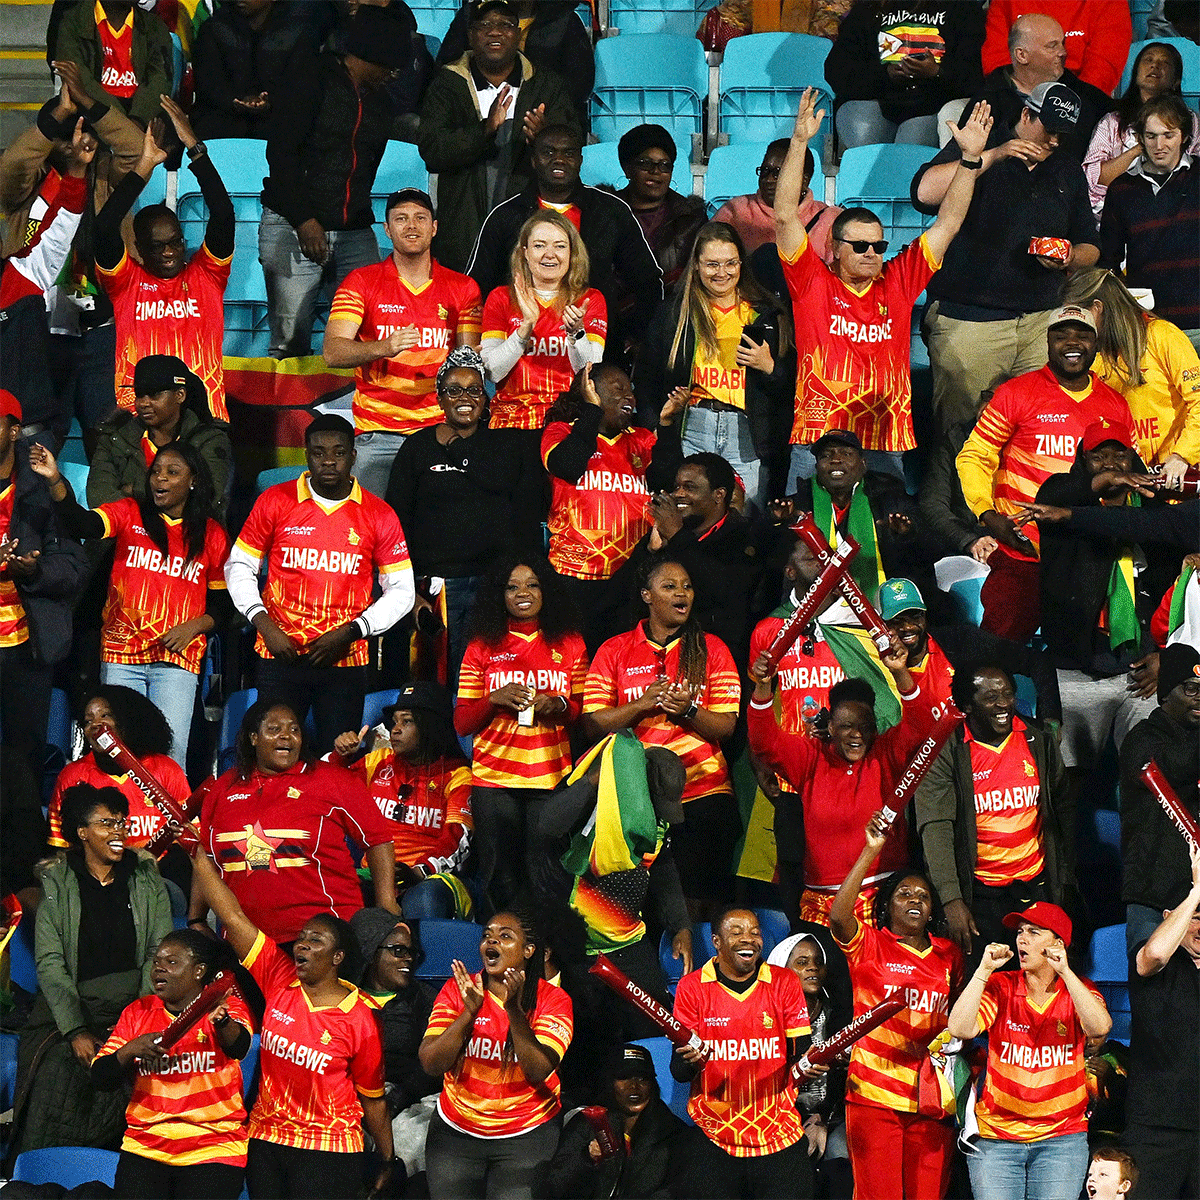 Ecstatic Zimbabwe fans at the stadium in Hobart on Friday